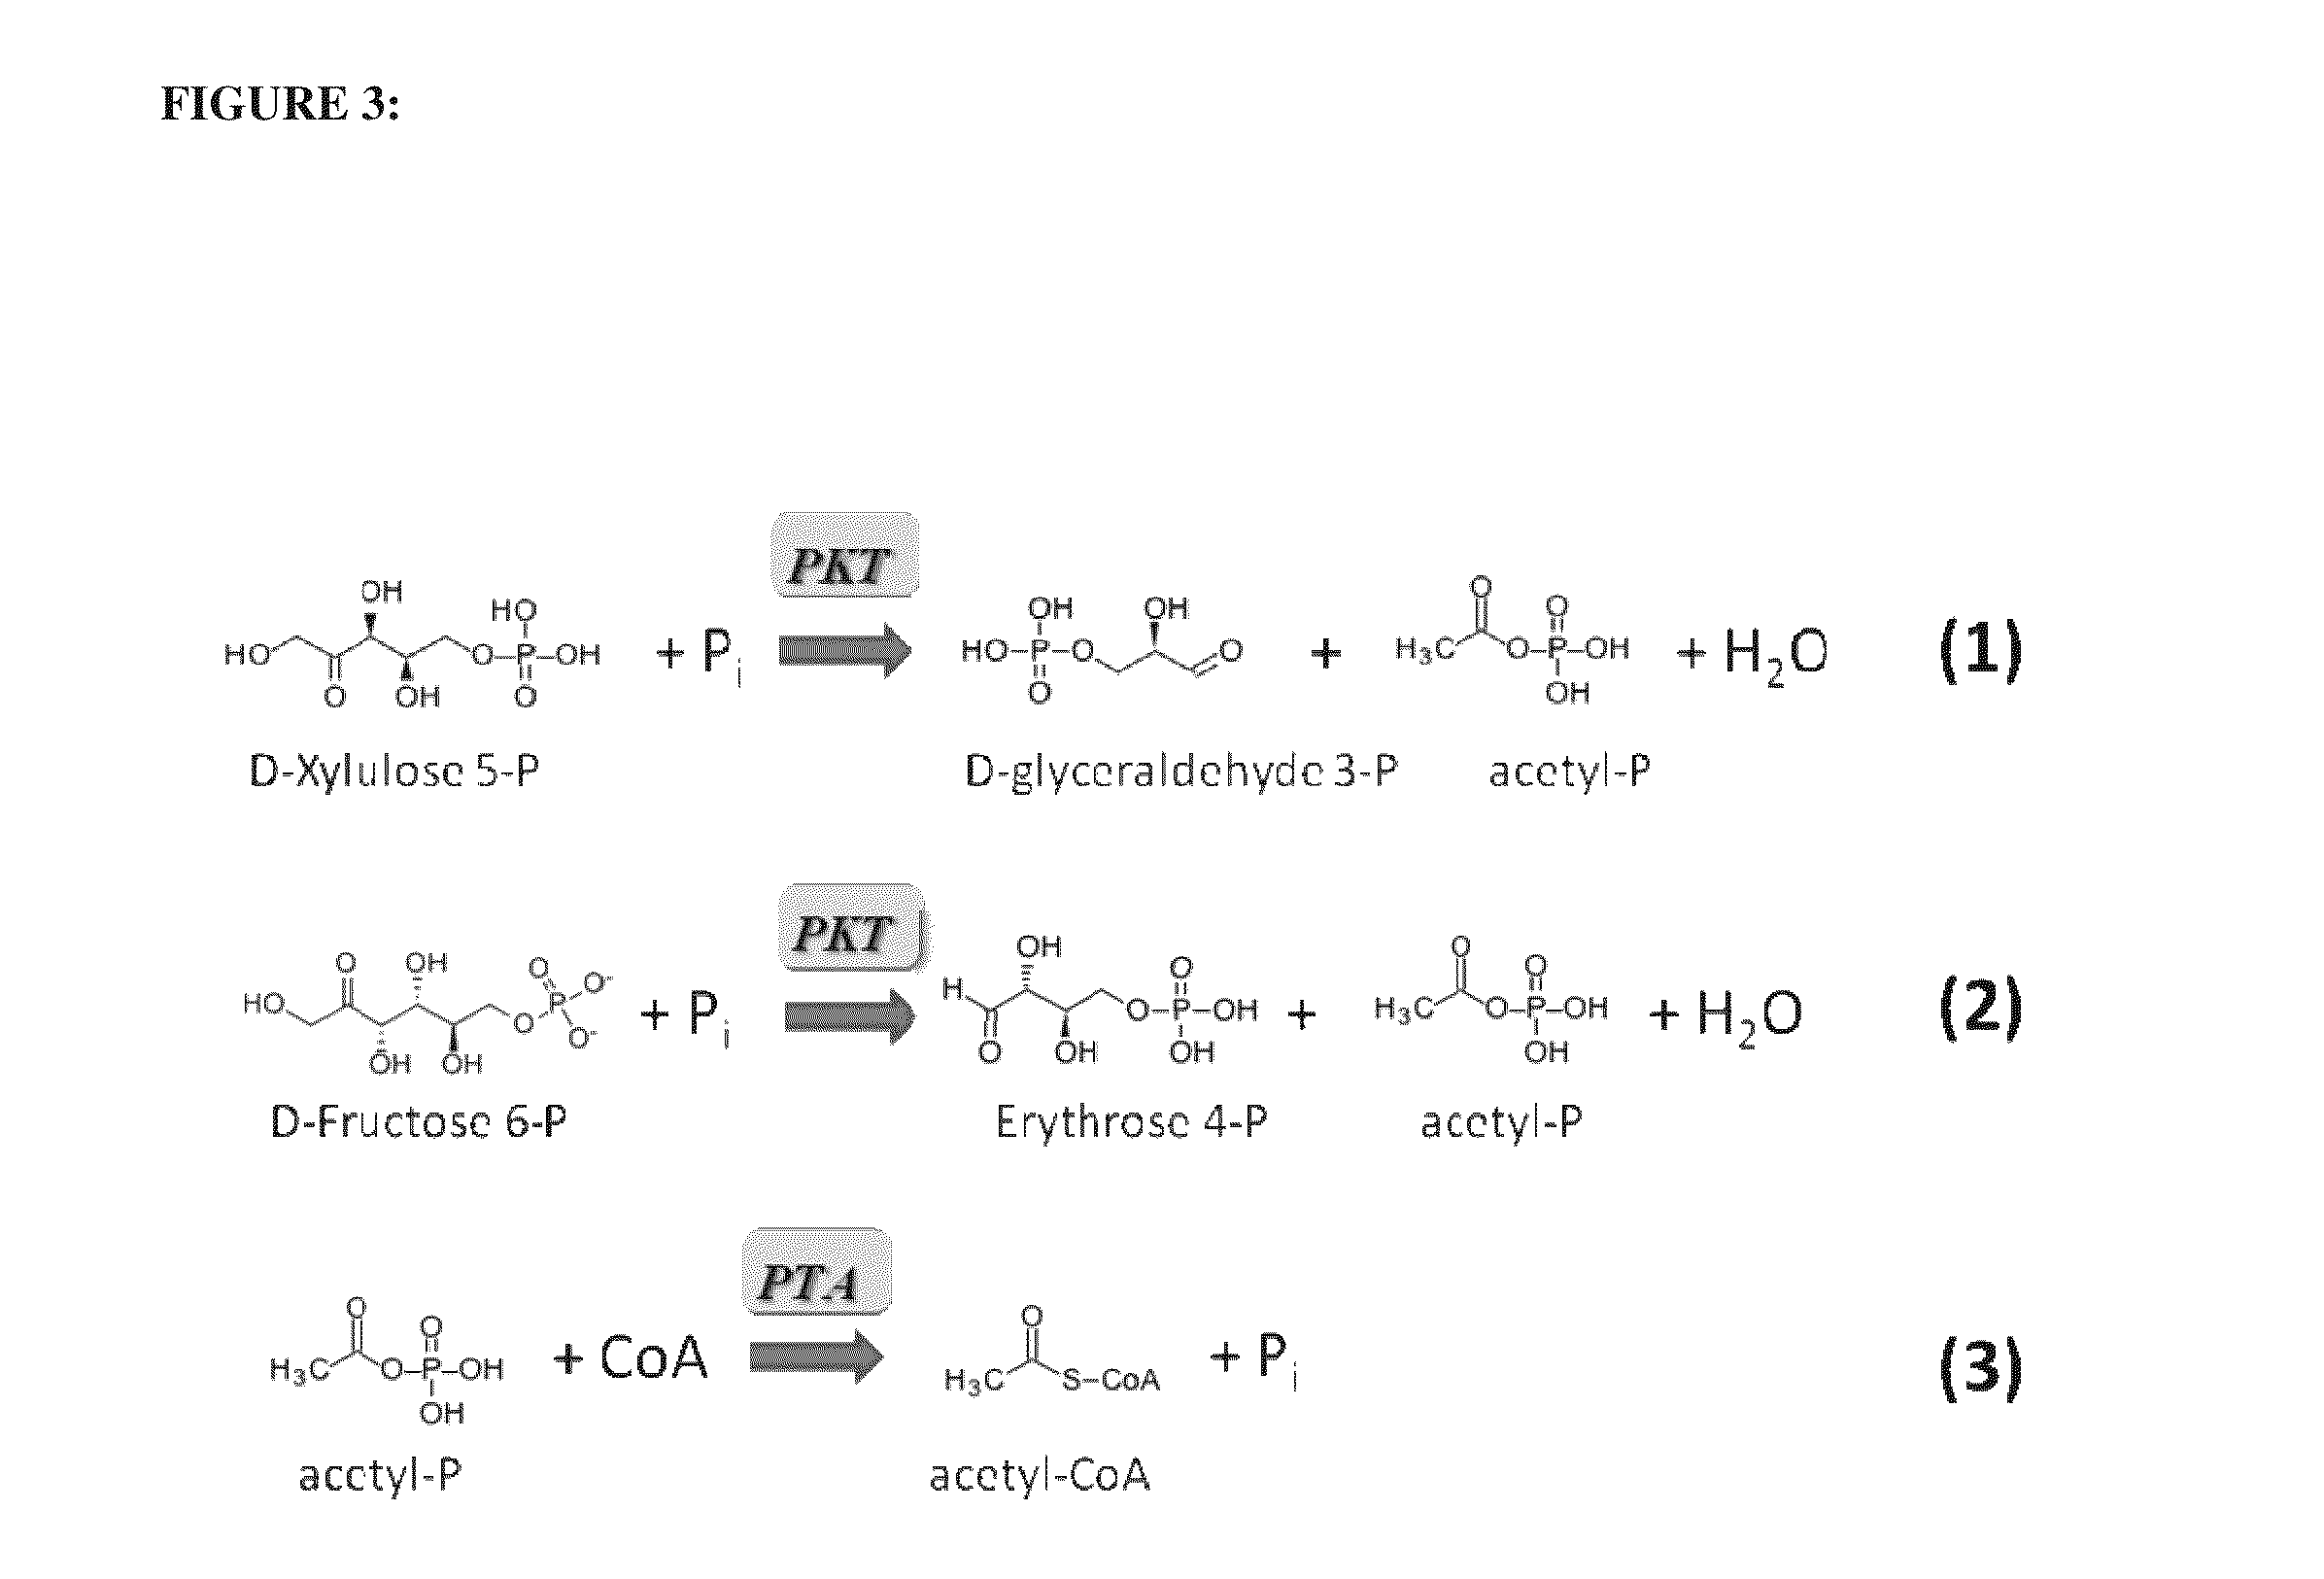 Utilization of phosphoketolase in the production of mevalonate, isoprenoid precursors, and isoprene